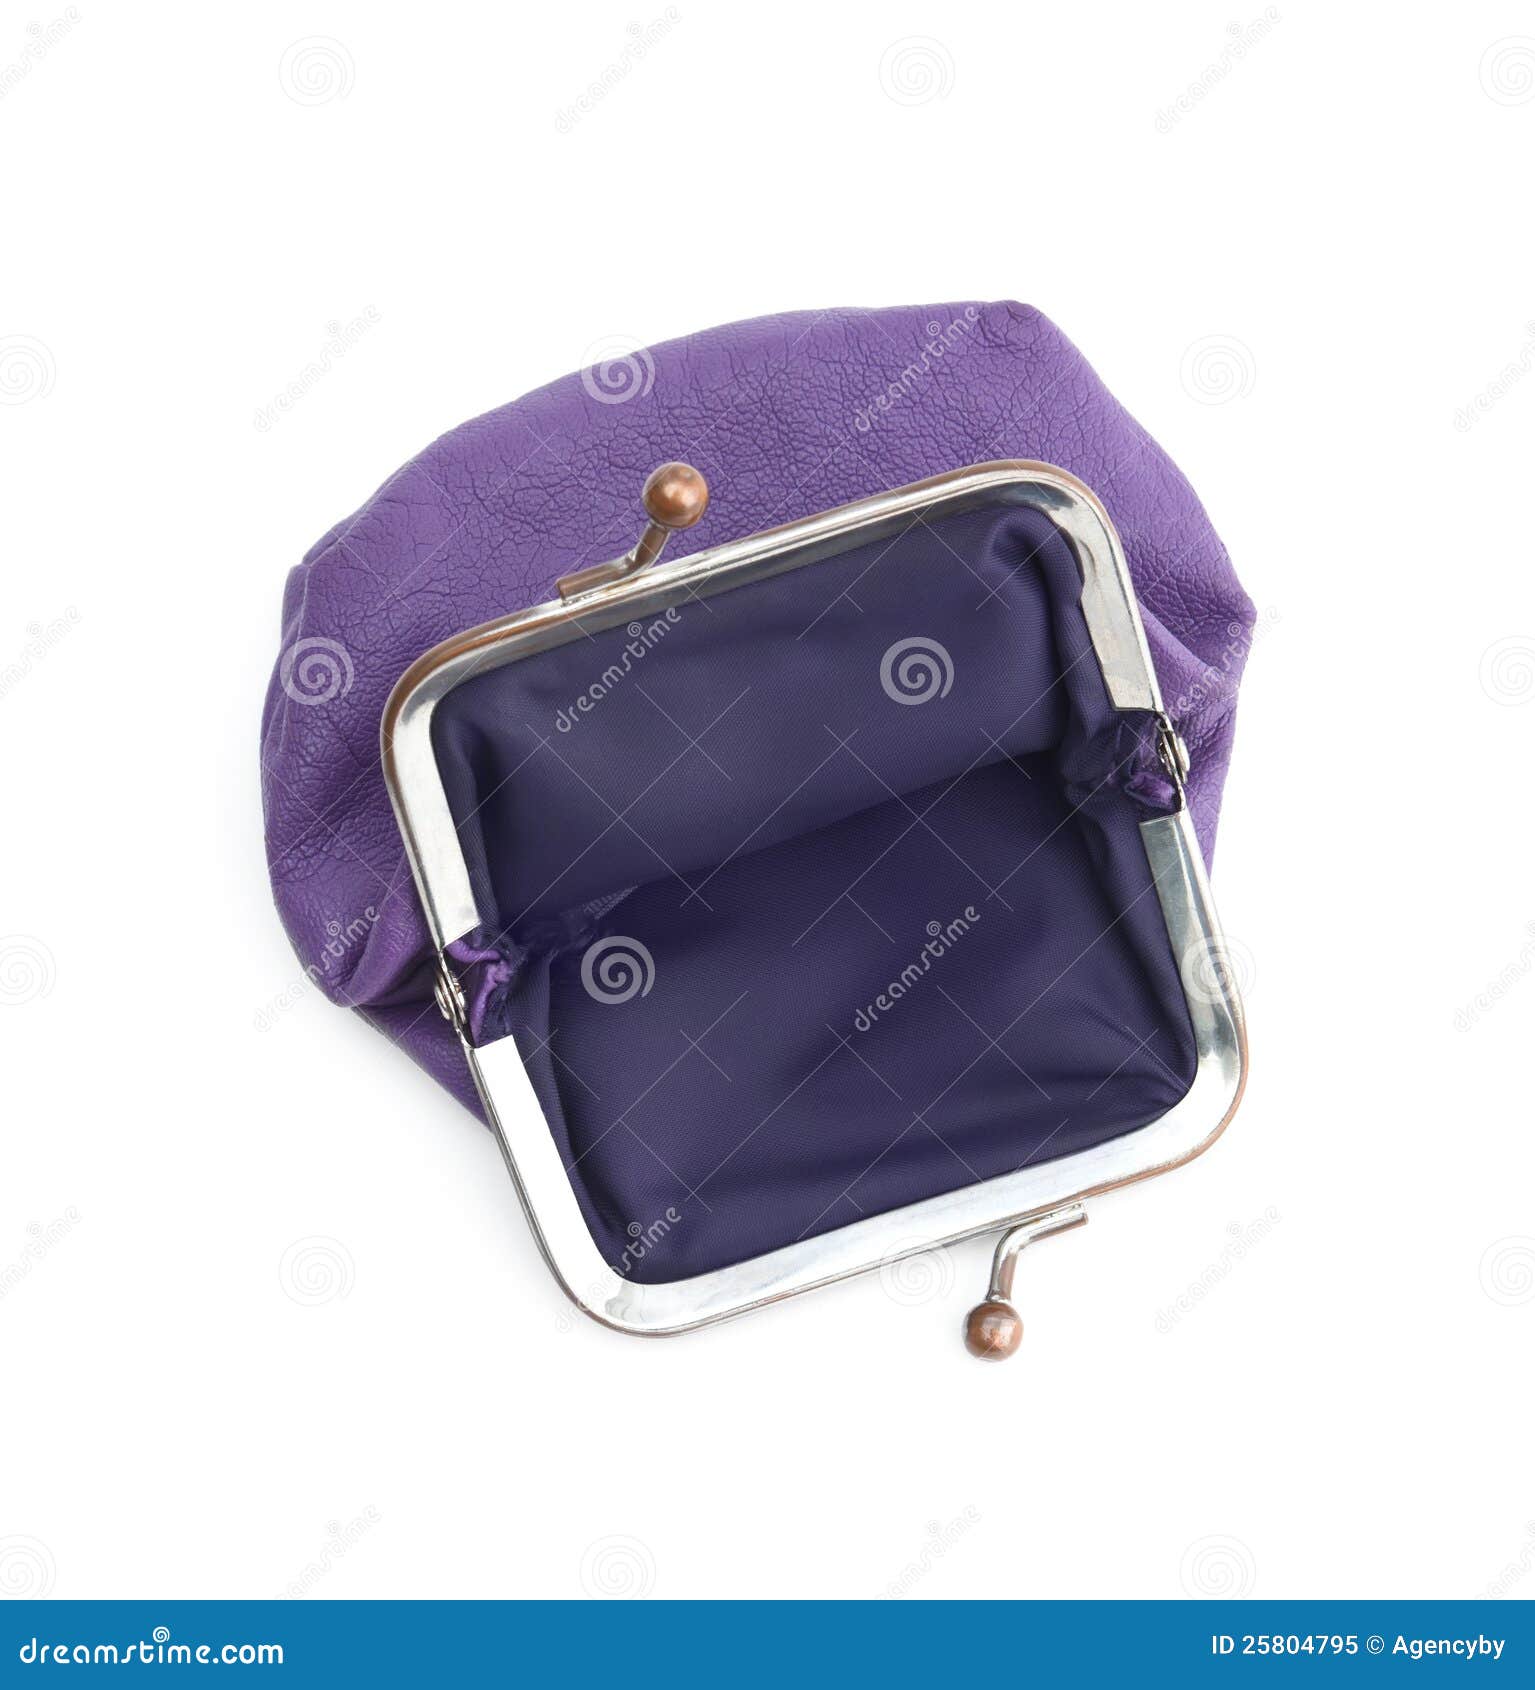 Valerie Stevens Leather Purple Purse Handbag Crossbody Strap Crocodile  Pattern | eBay